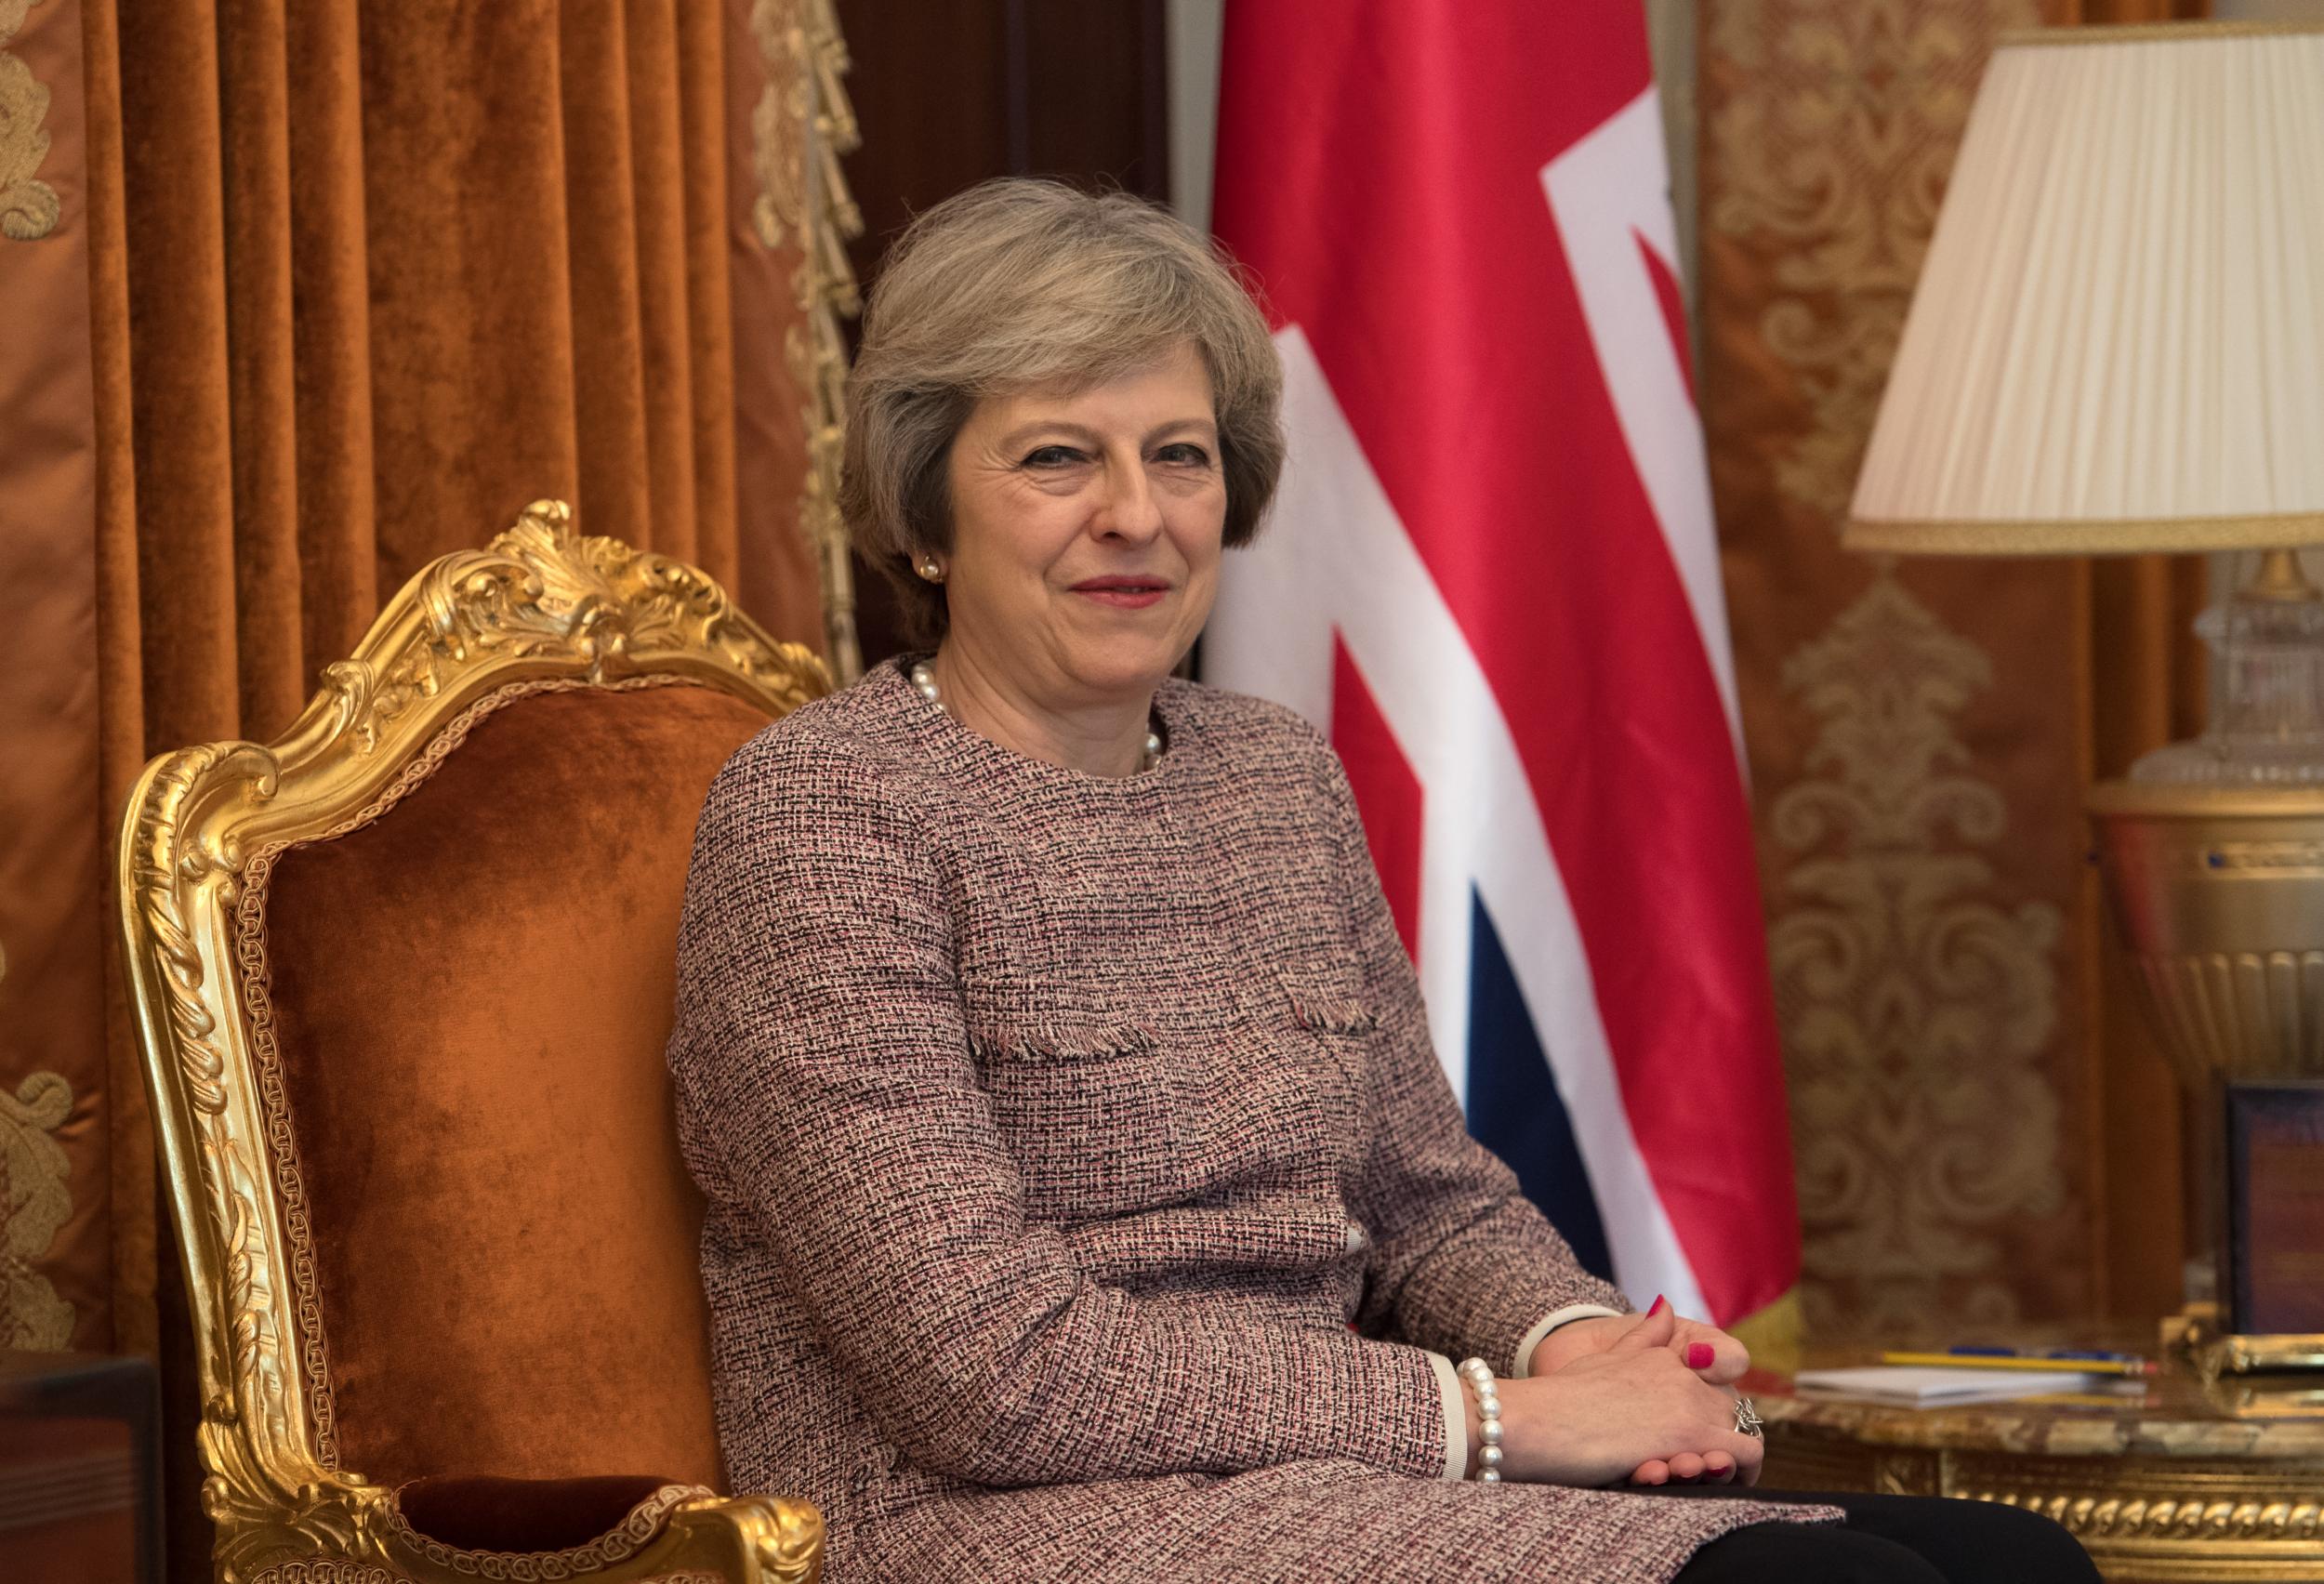 Theresa May looks on as she meets Sheikh Tamim bin Hamad Al Thani, the Emir of Qatar